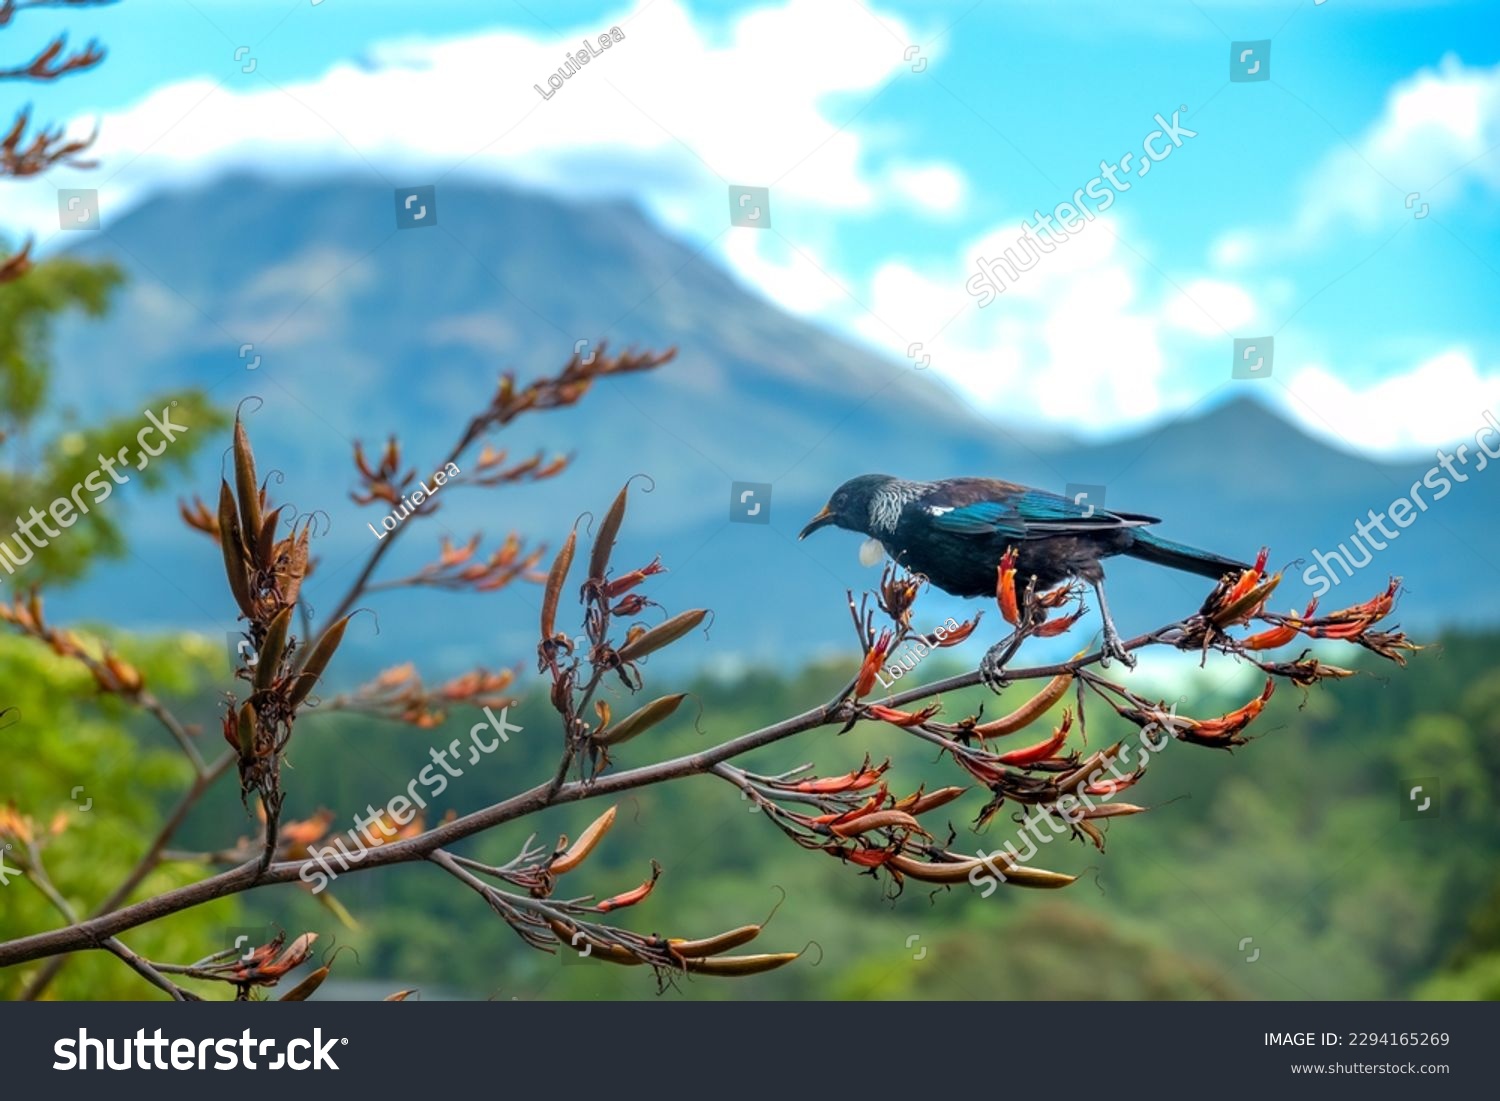 Tui bird (Tūī) (Prosthemadera novaeseelandiae), a unique an endemic passerine species only found in New Zealand. #2294165269